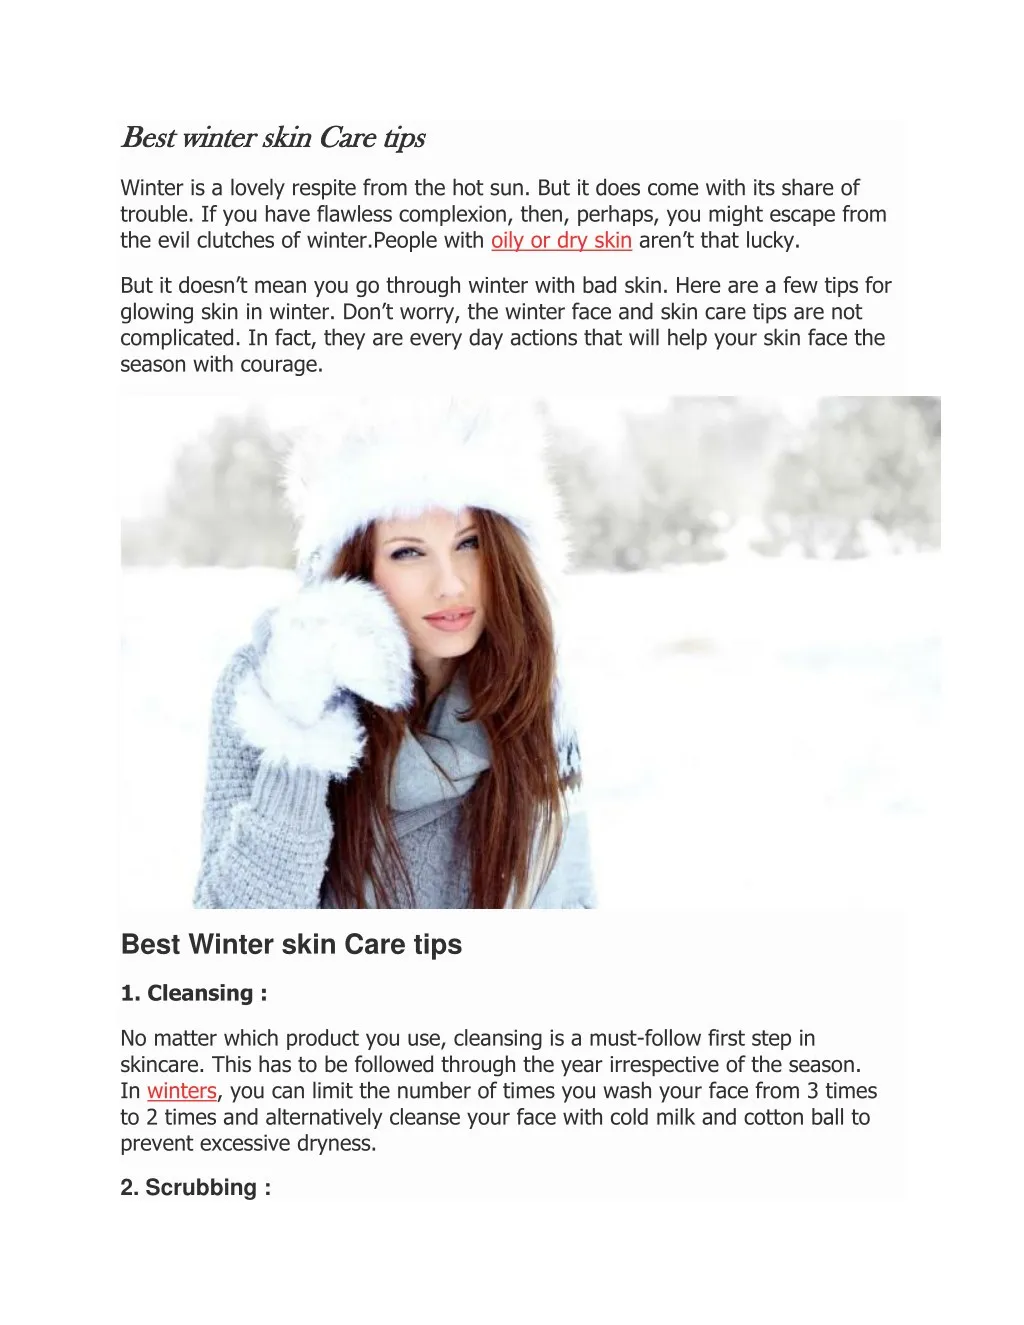 best best winter winter skin care tips skin care